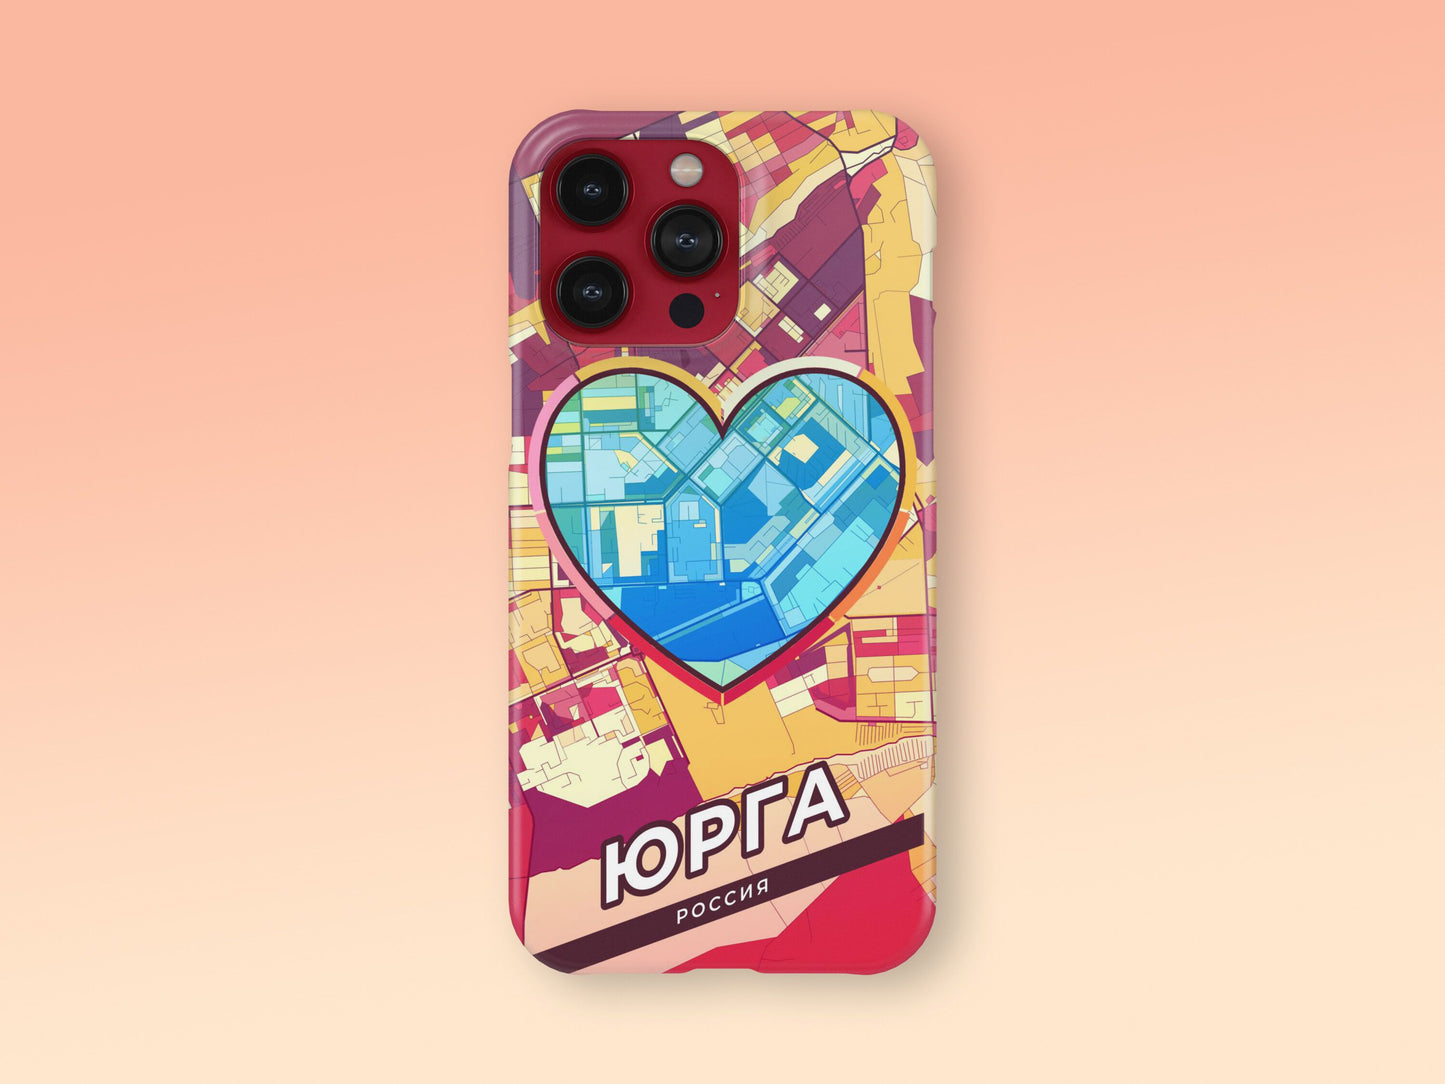 Yurga Russia slim phone case with colorful icon 2